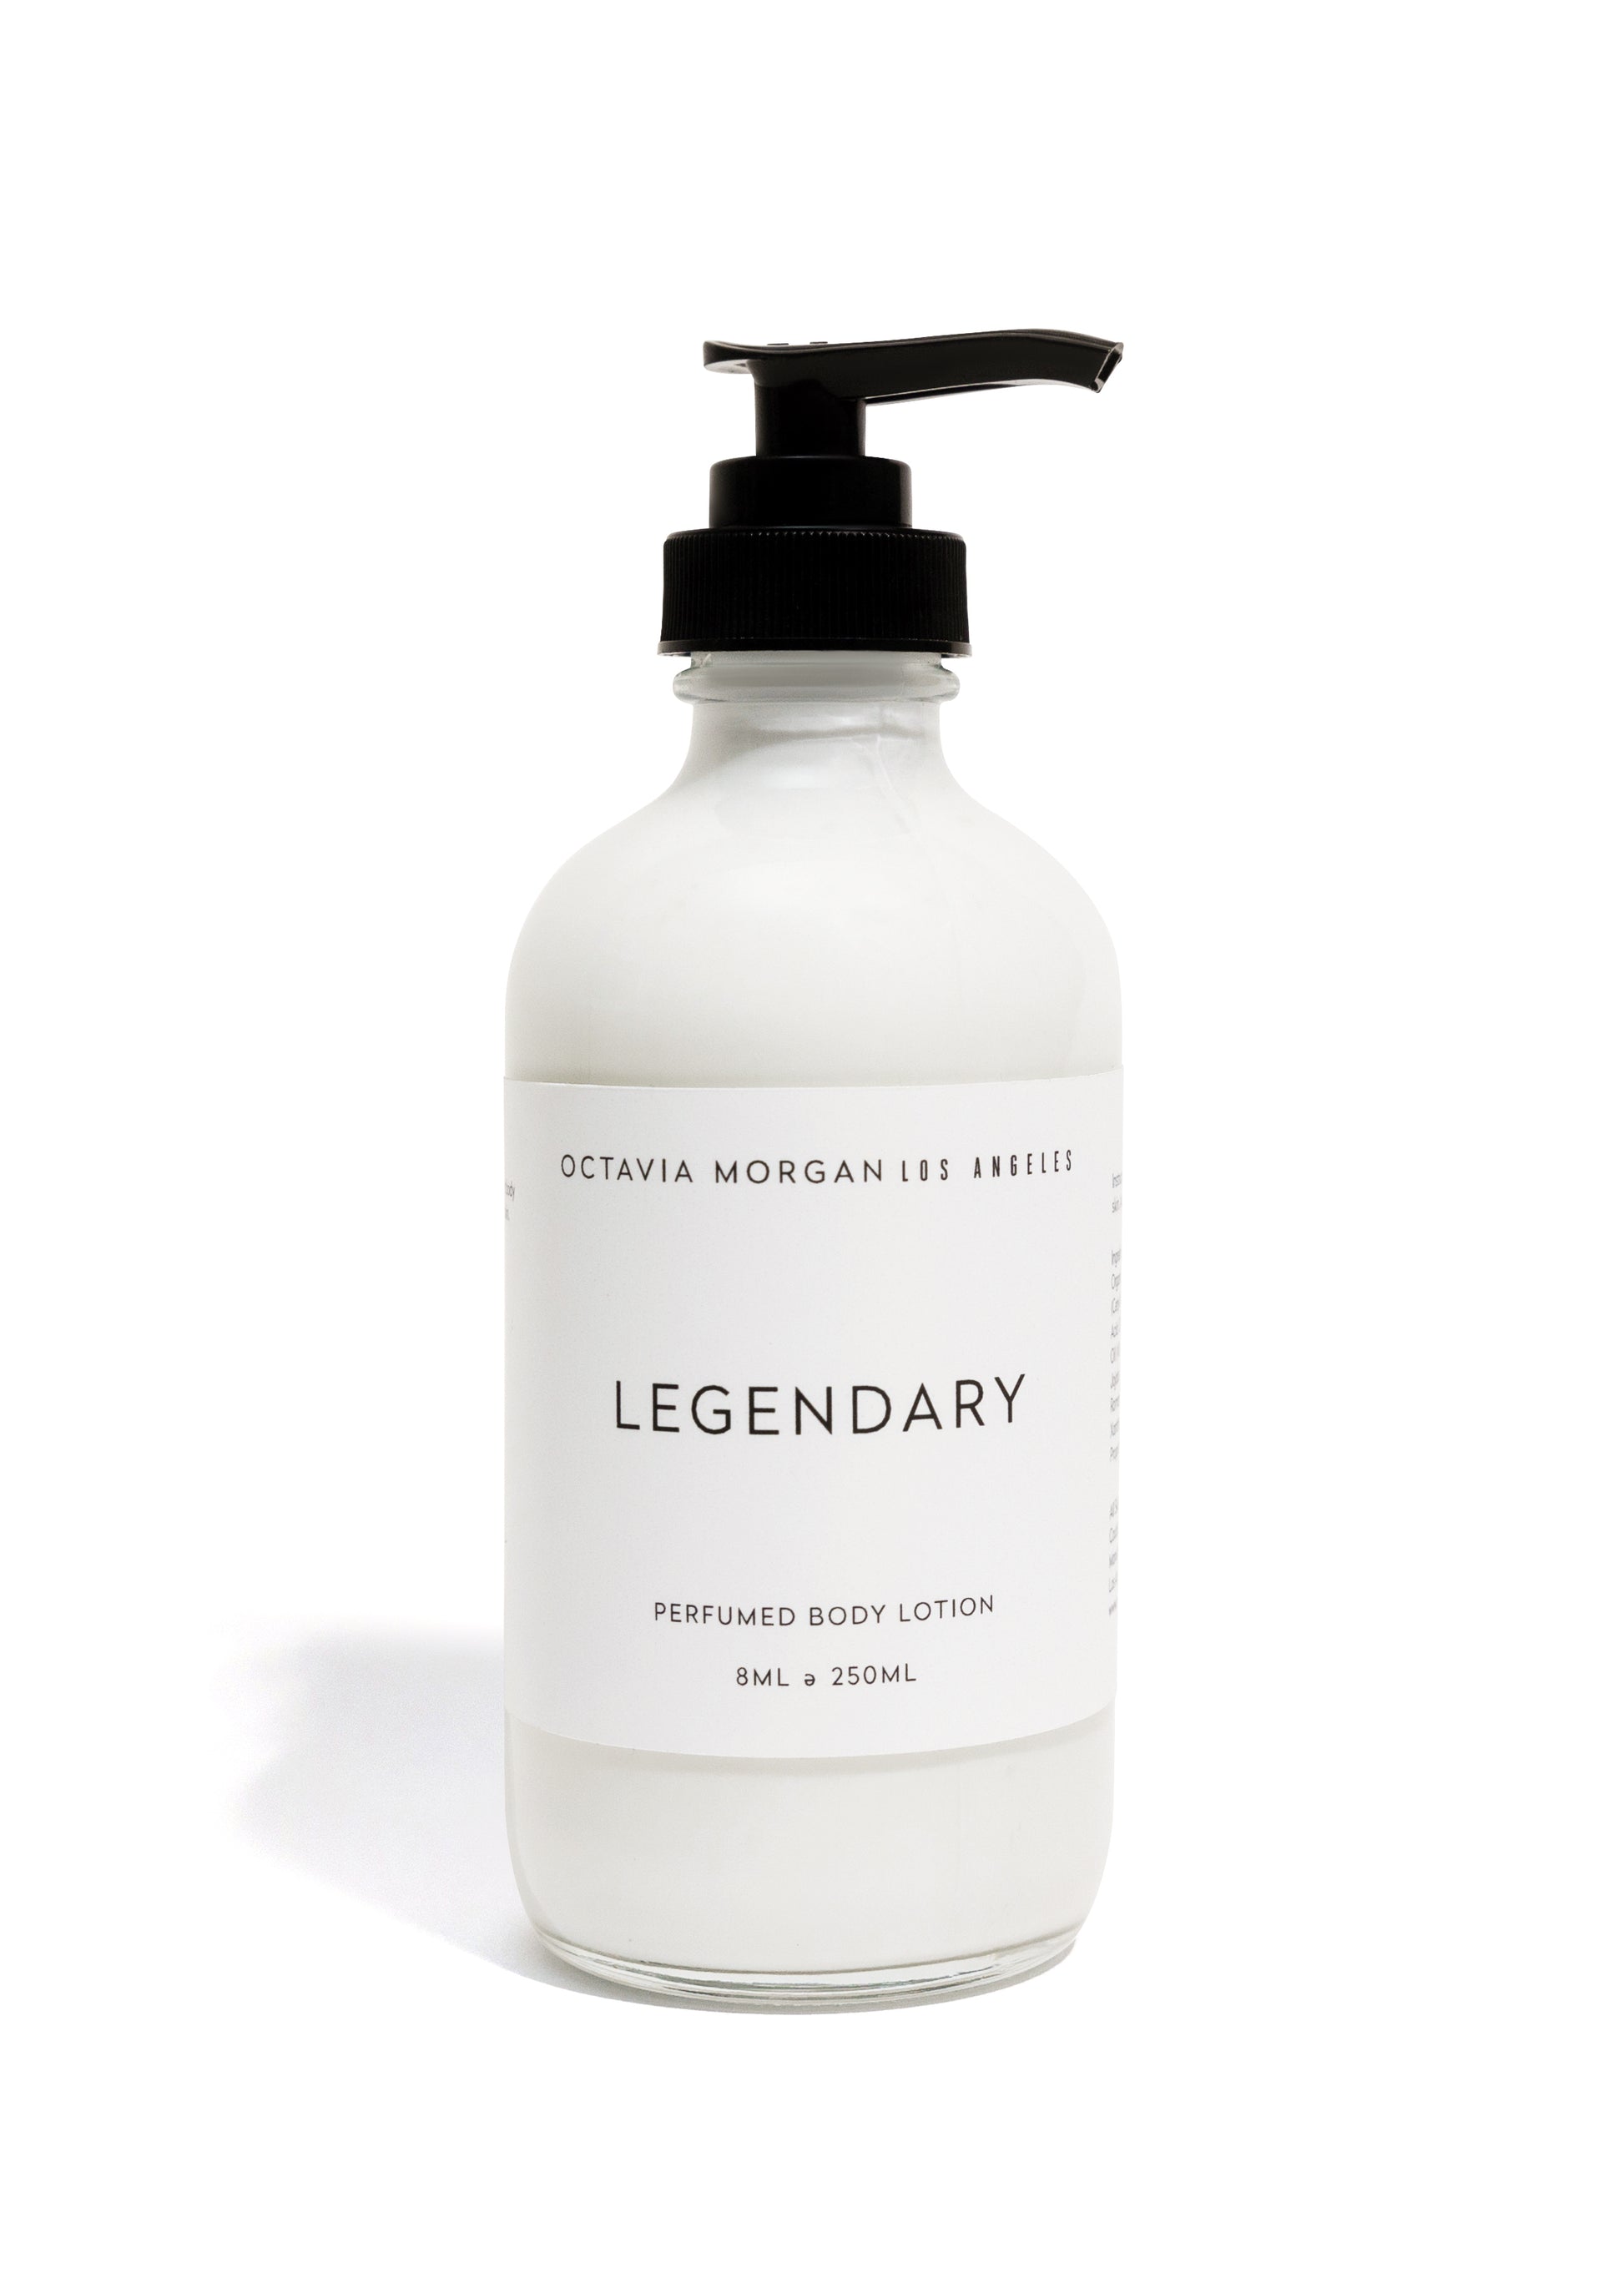 8oz LEGENDARY Perfumed Body Lotion - Octavia Morgan Los Angeles 